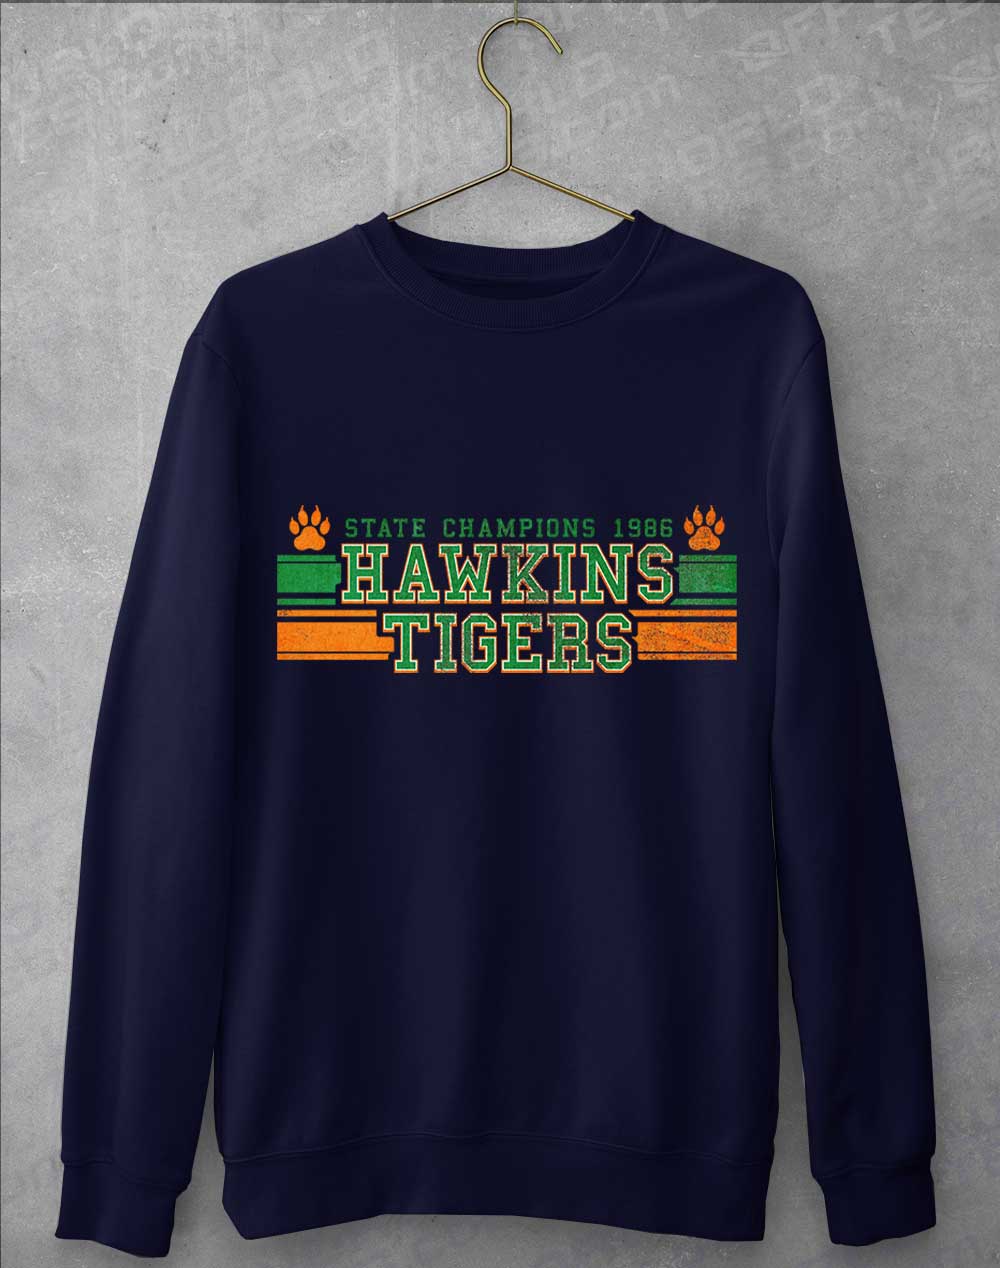 Oxford Navy - Hawkins Tigers State Champs 1986 Sweatshirt